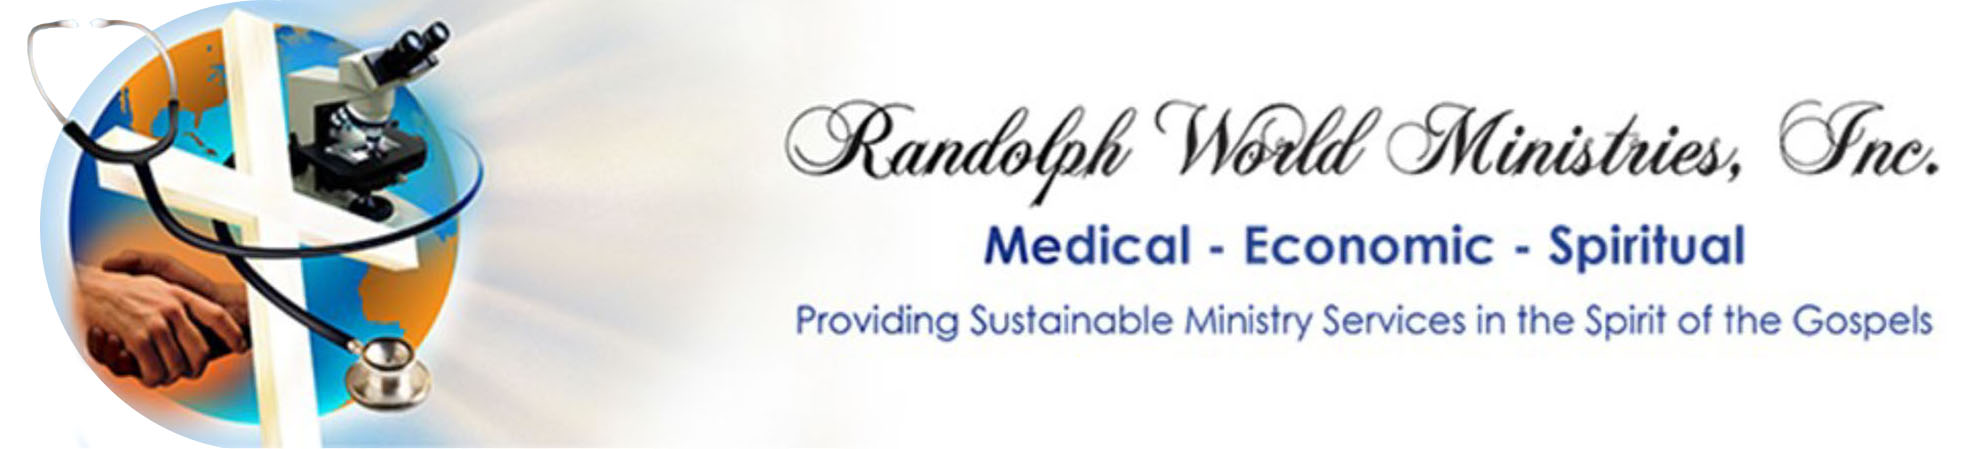 Randolph World Ministry